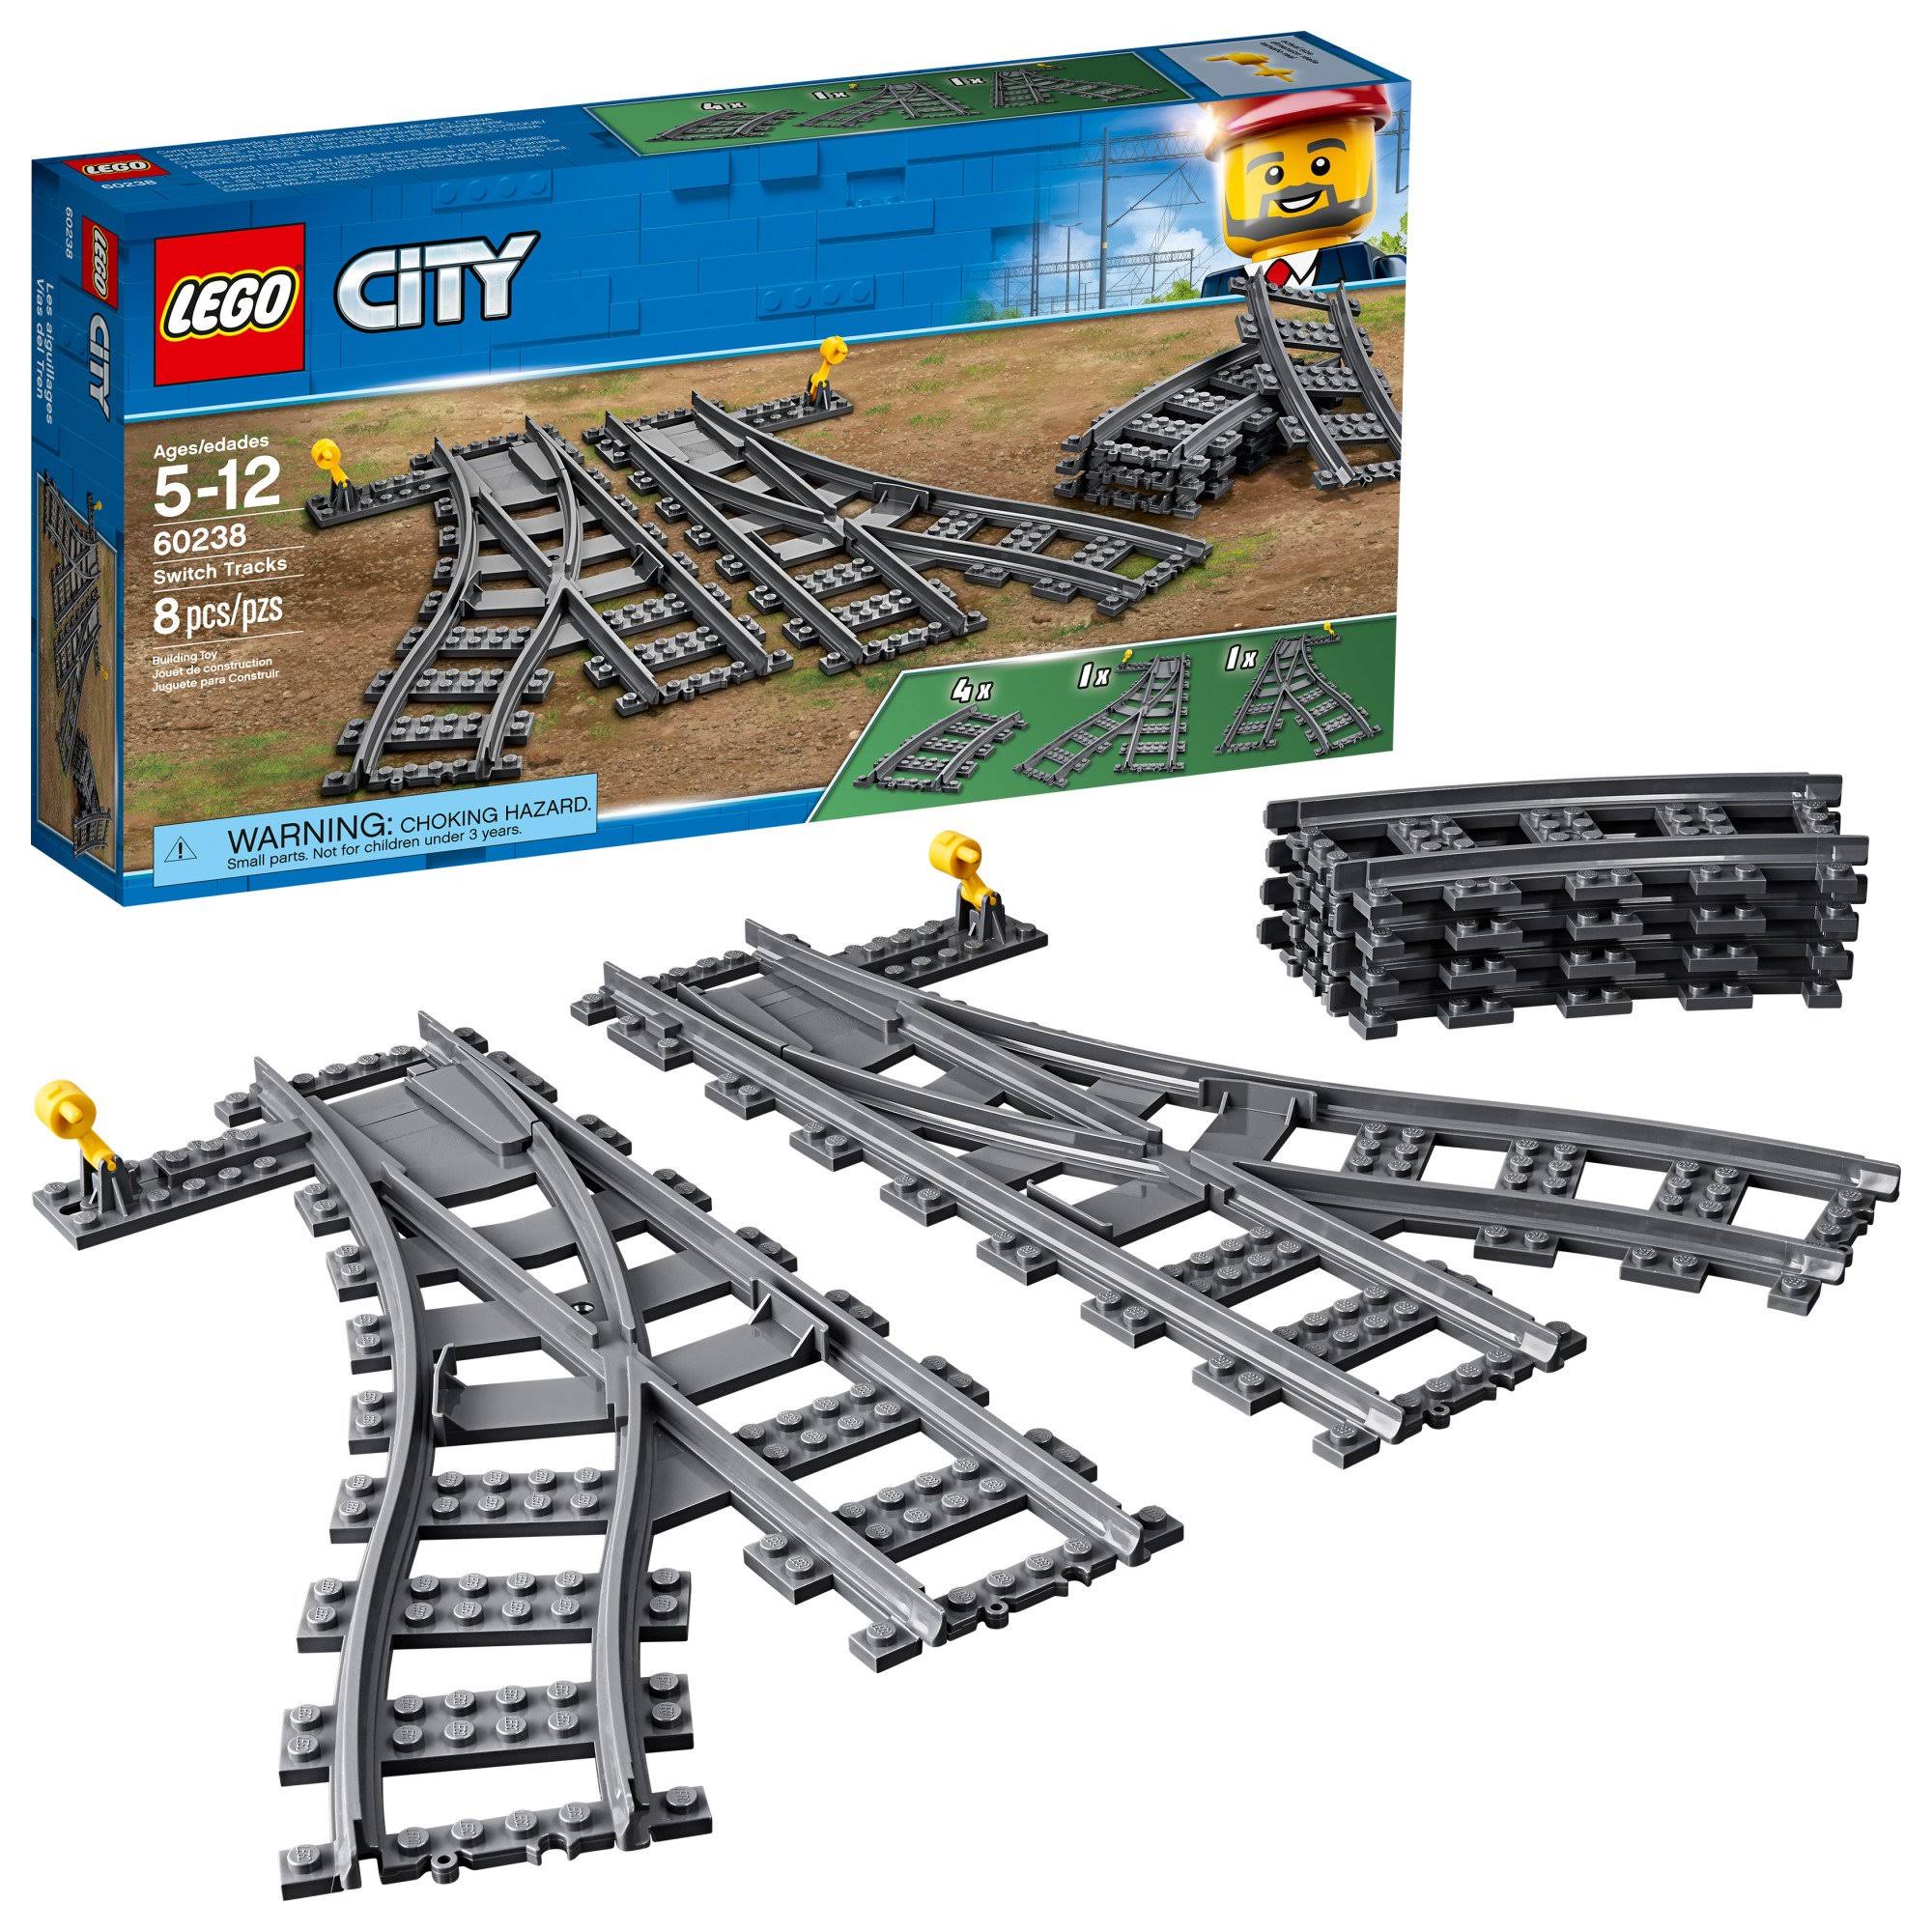 Lego City Trains Switch Tracks Building Kit - 8pcs